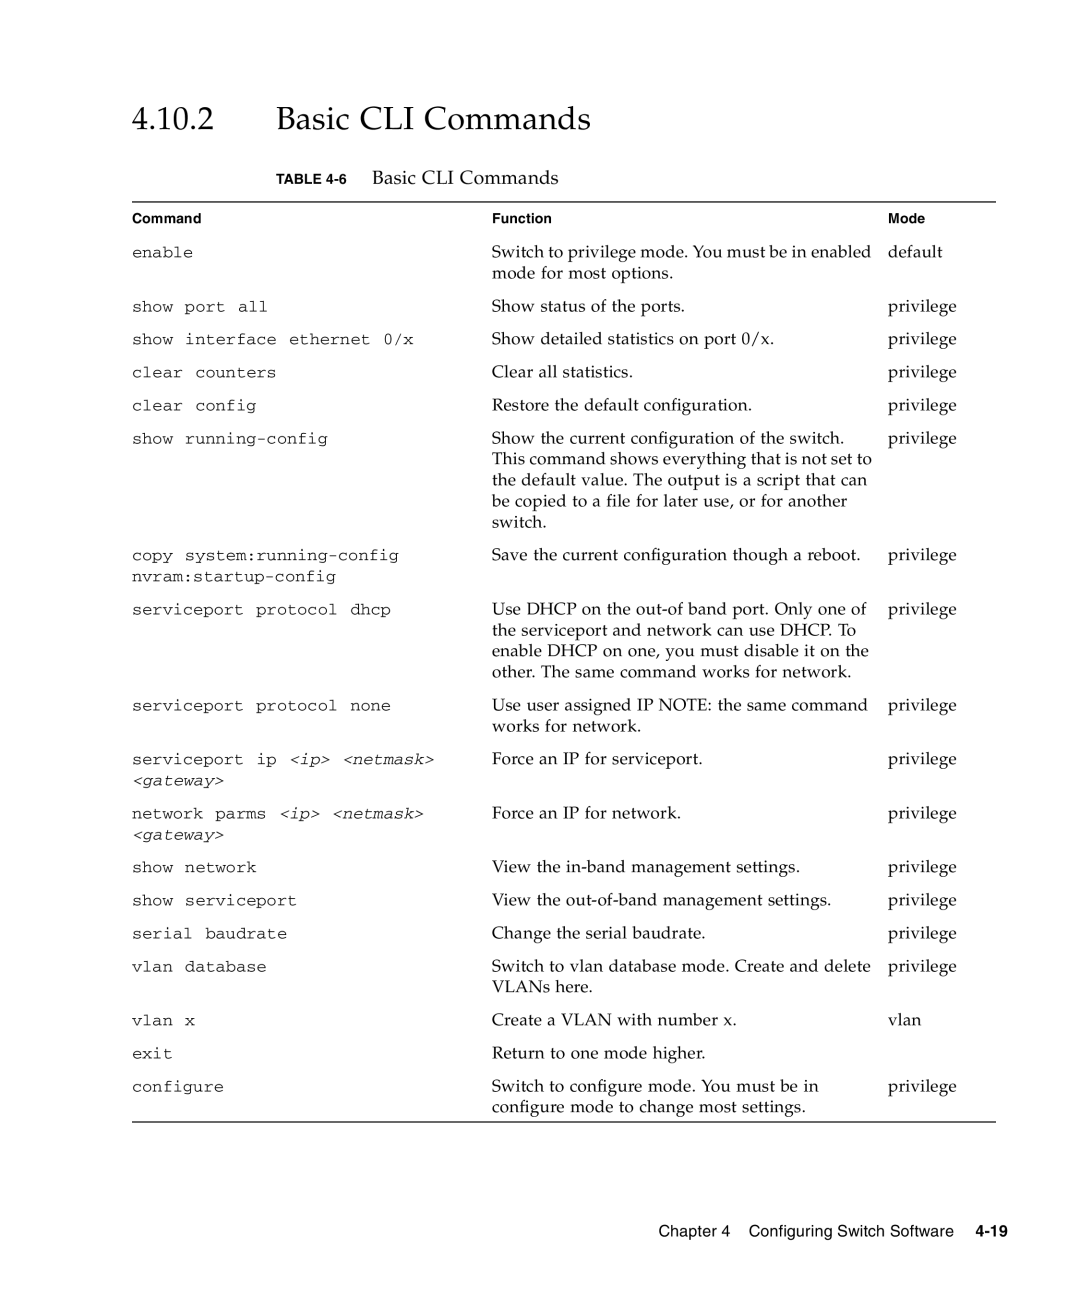 Sun Microsystems CP3240 manual 6 Basic CLI Commands 